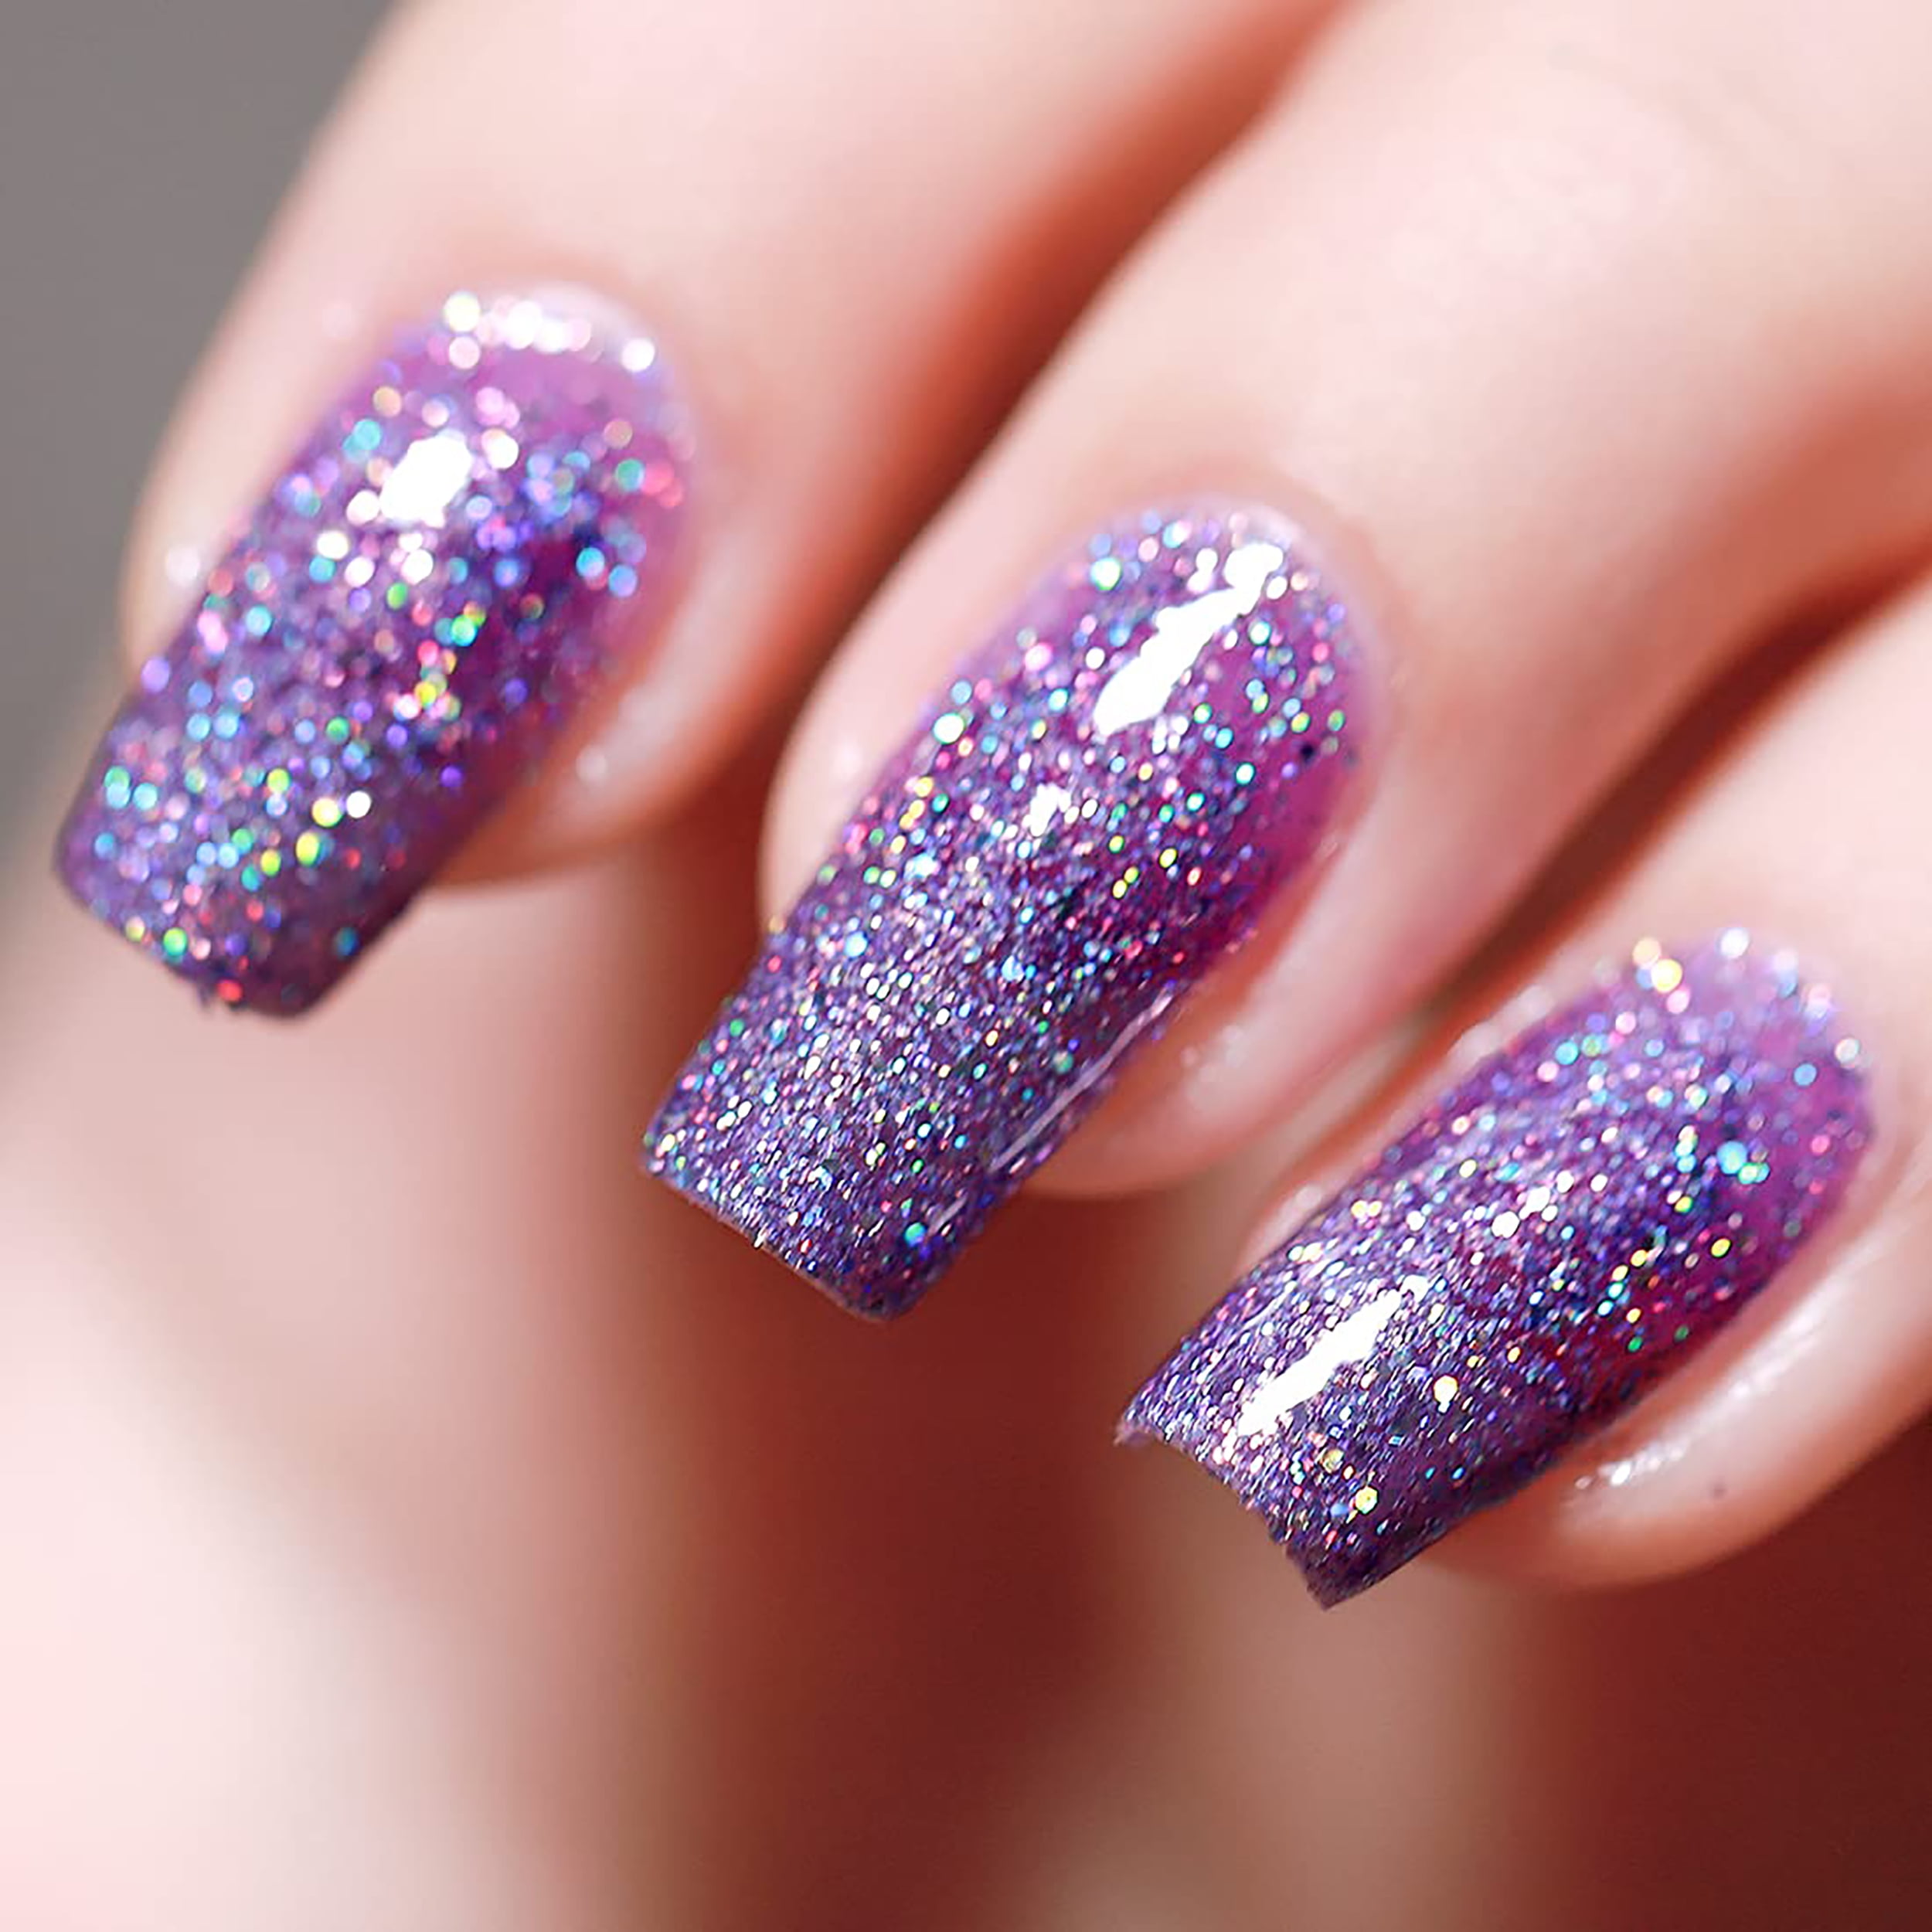 How to Apply Glitter Nail Polish | ella+mila